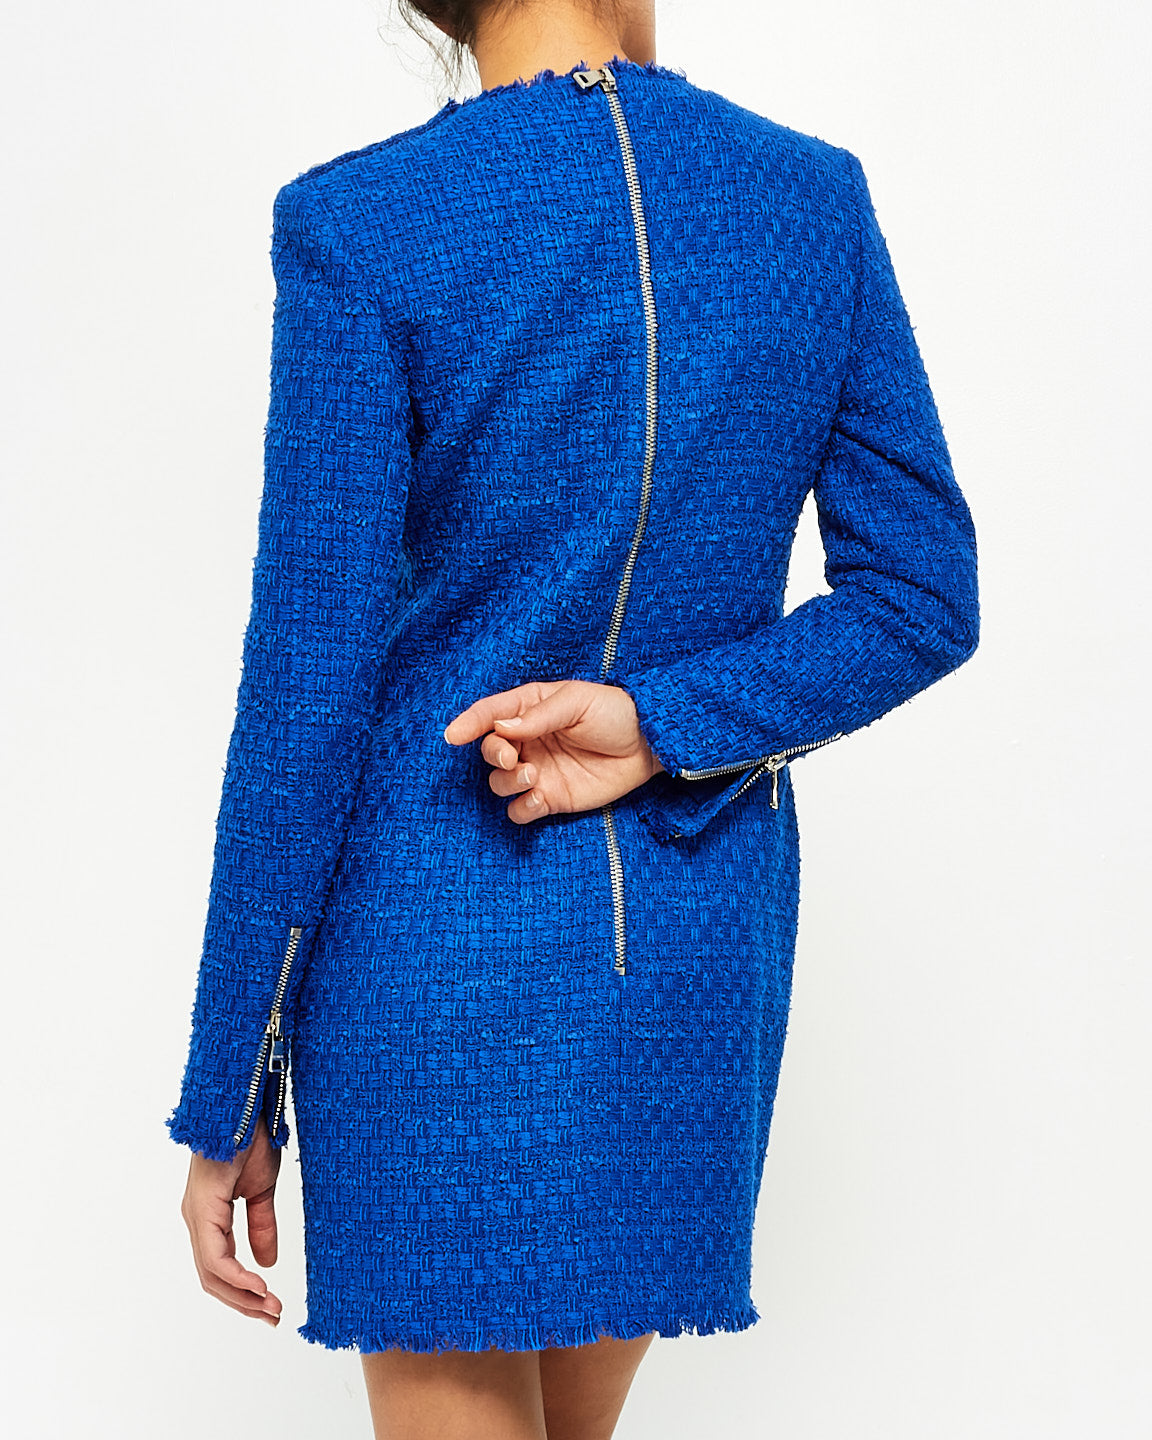 Balmain Royal Blue Tweed Dress - 40